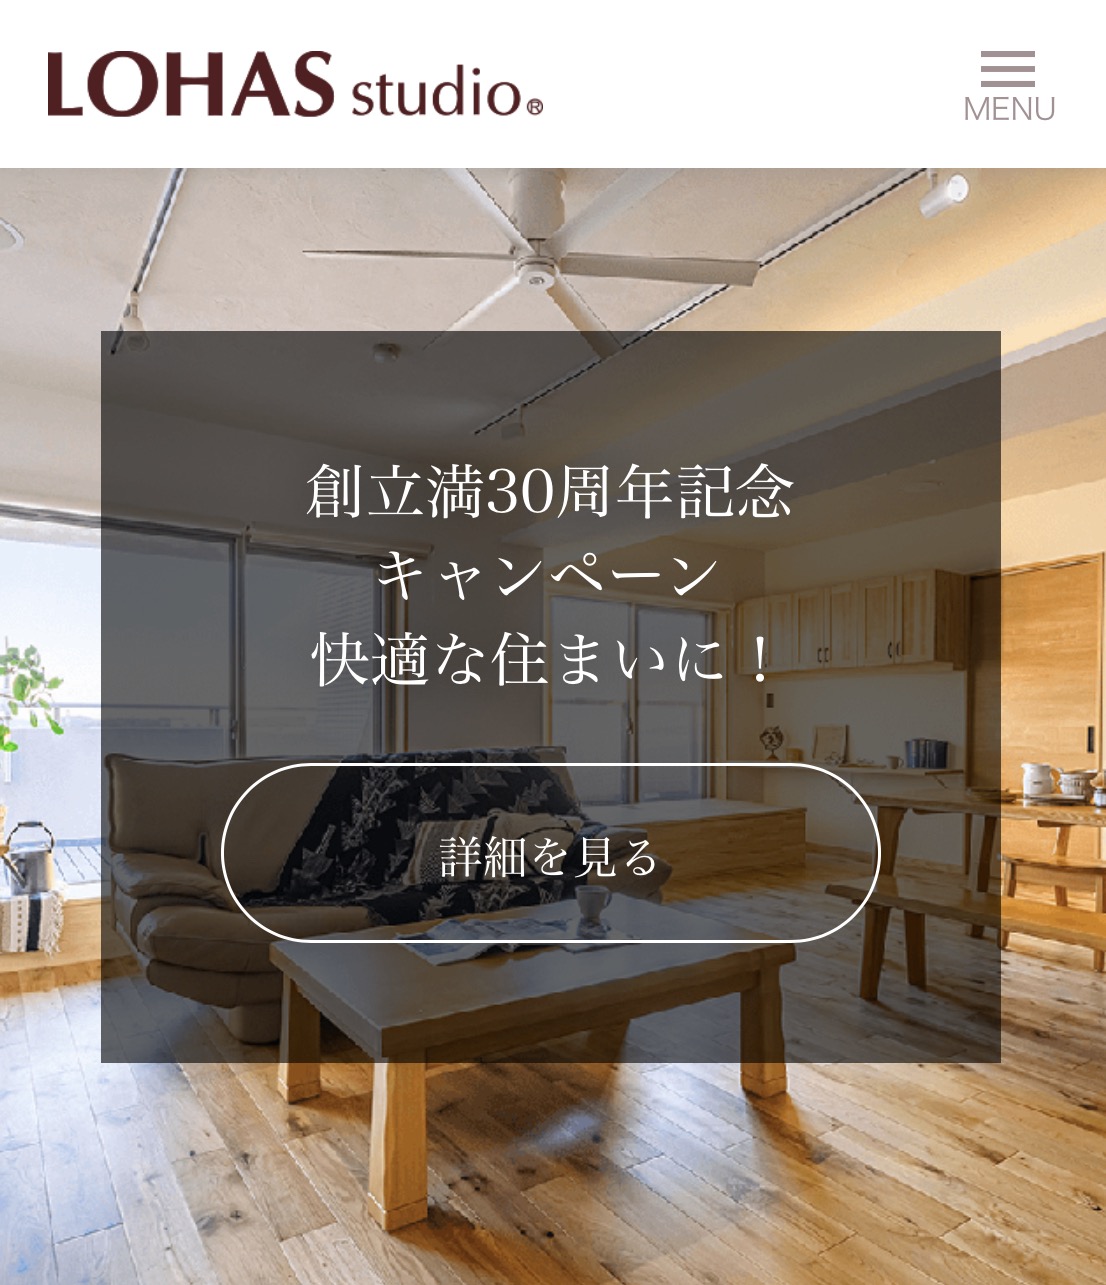 LOHAS studio公式サイト